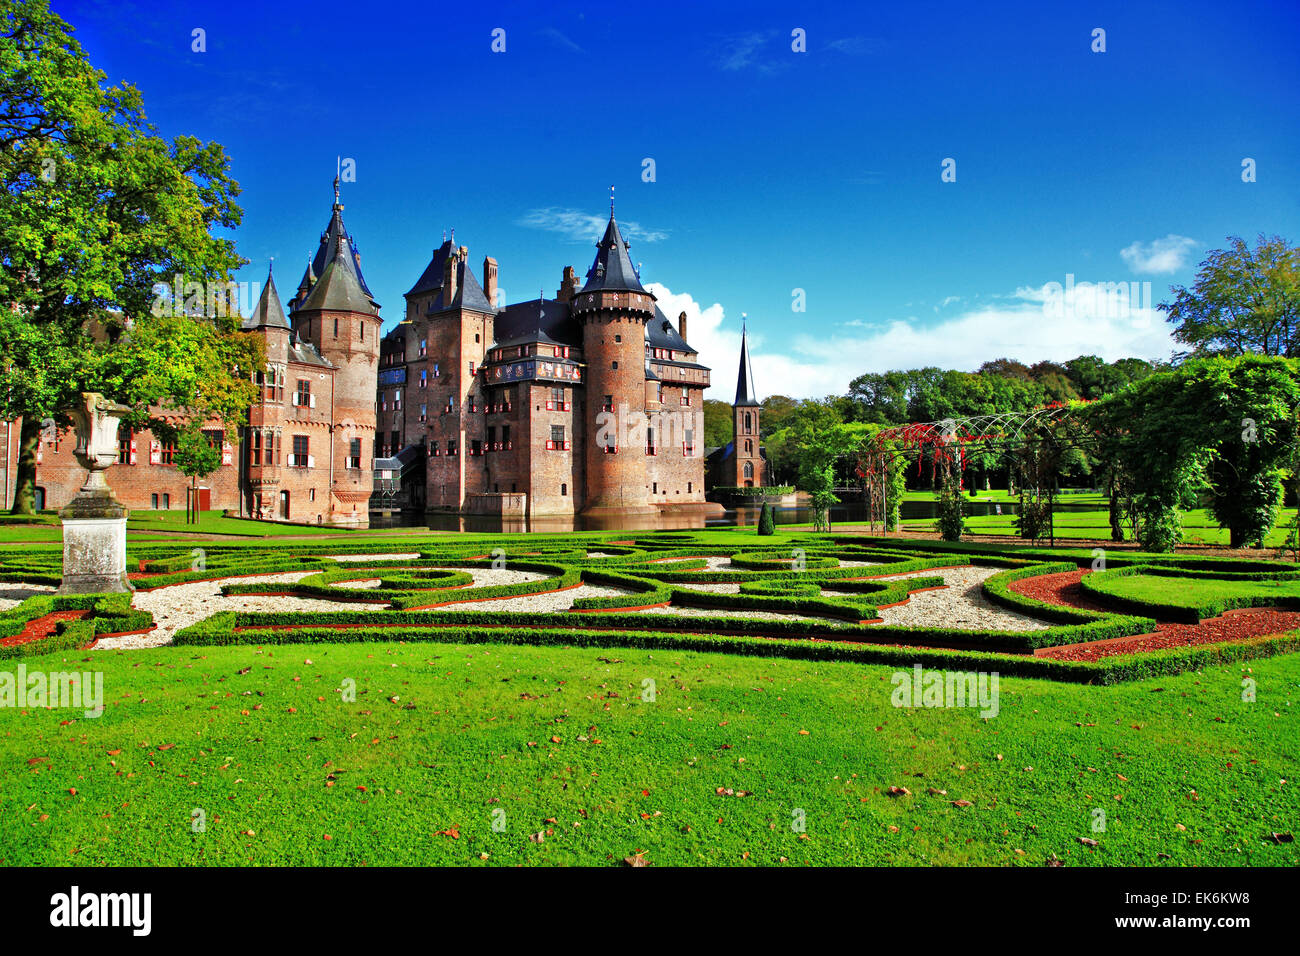 Impressionante de haar vecchio castello,Olanda. Foto Stock